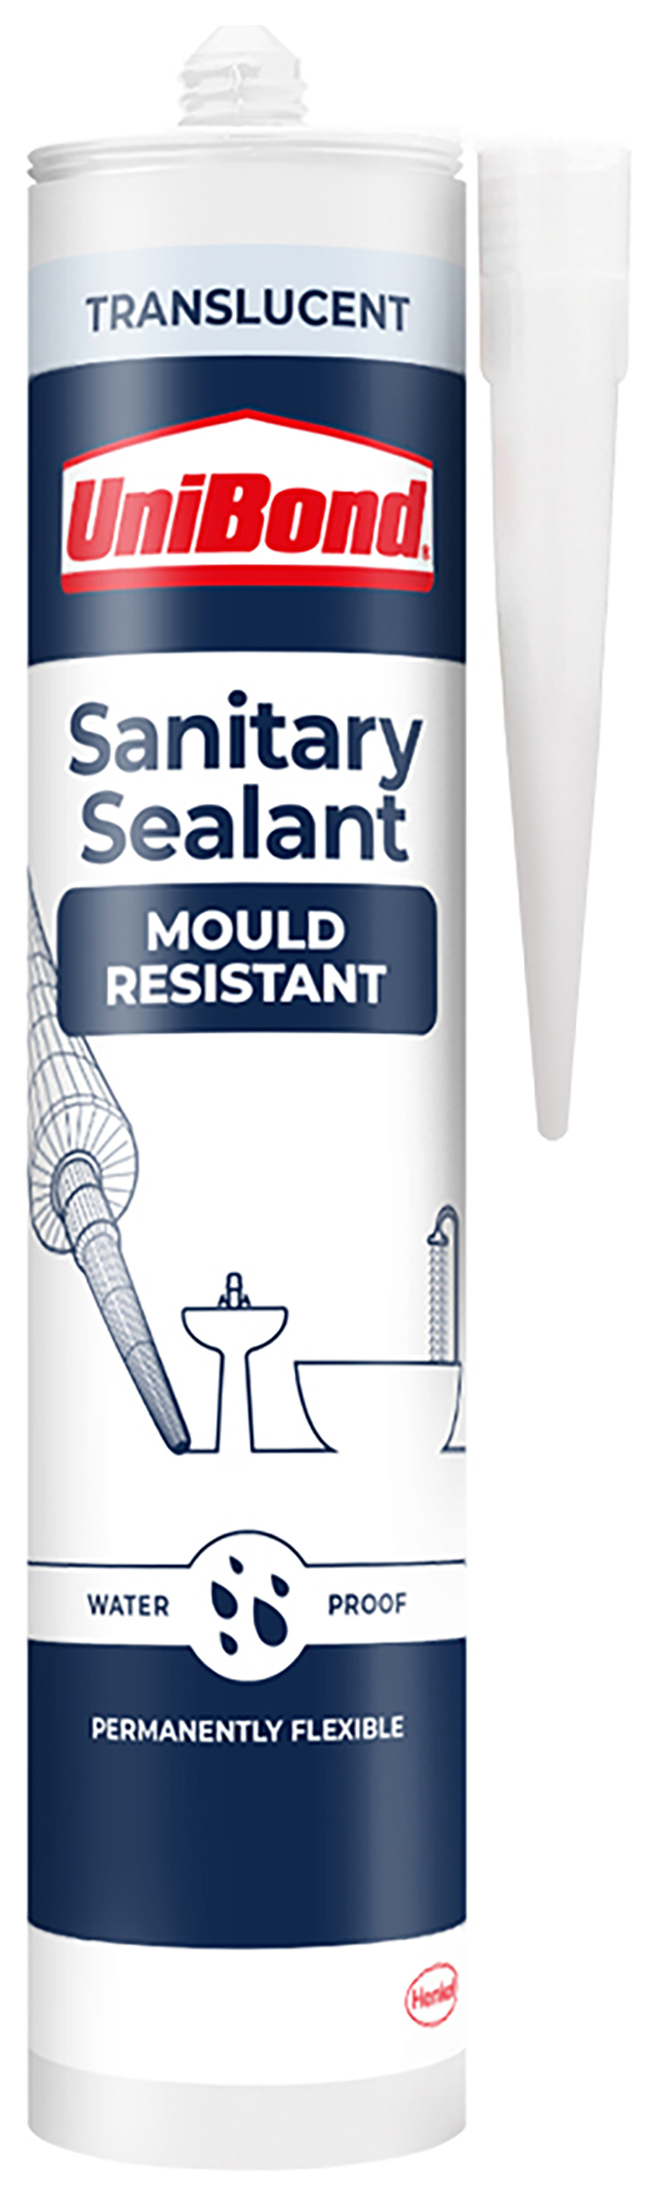 Unibond Sanitary Anti Mould Translucent Sealant - 274g